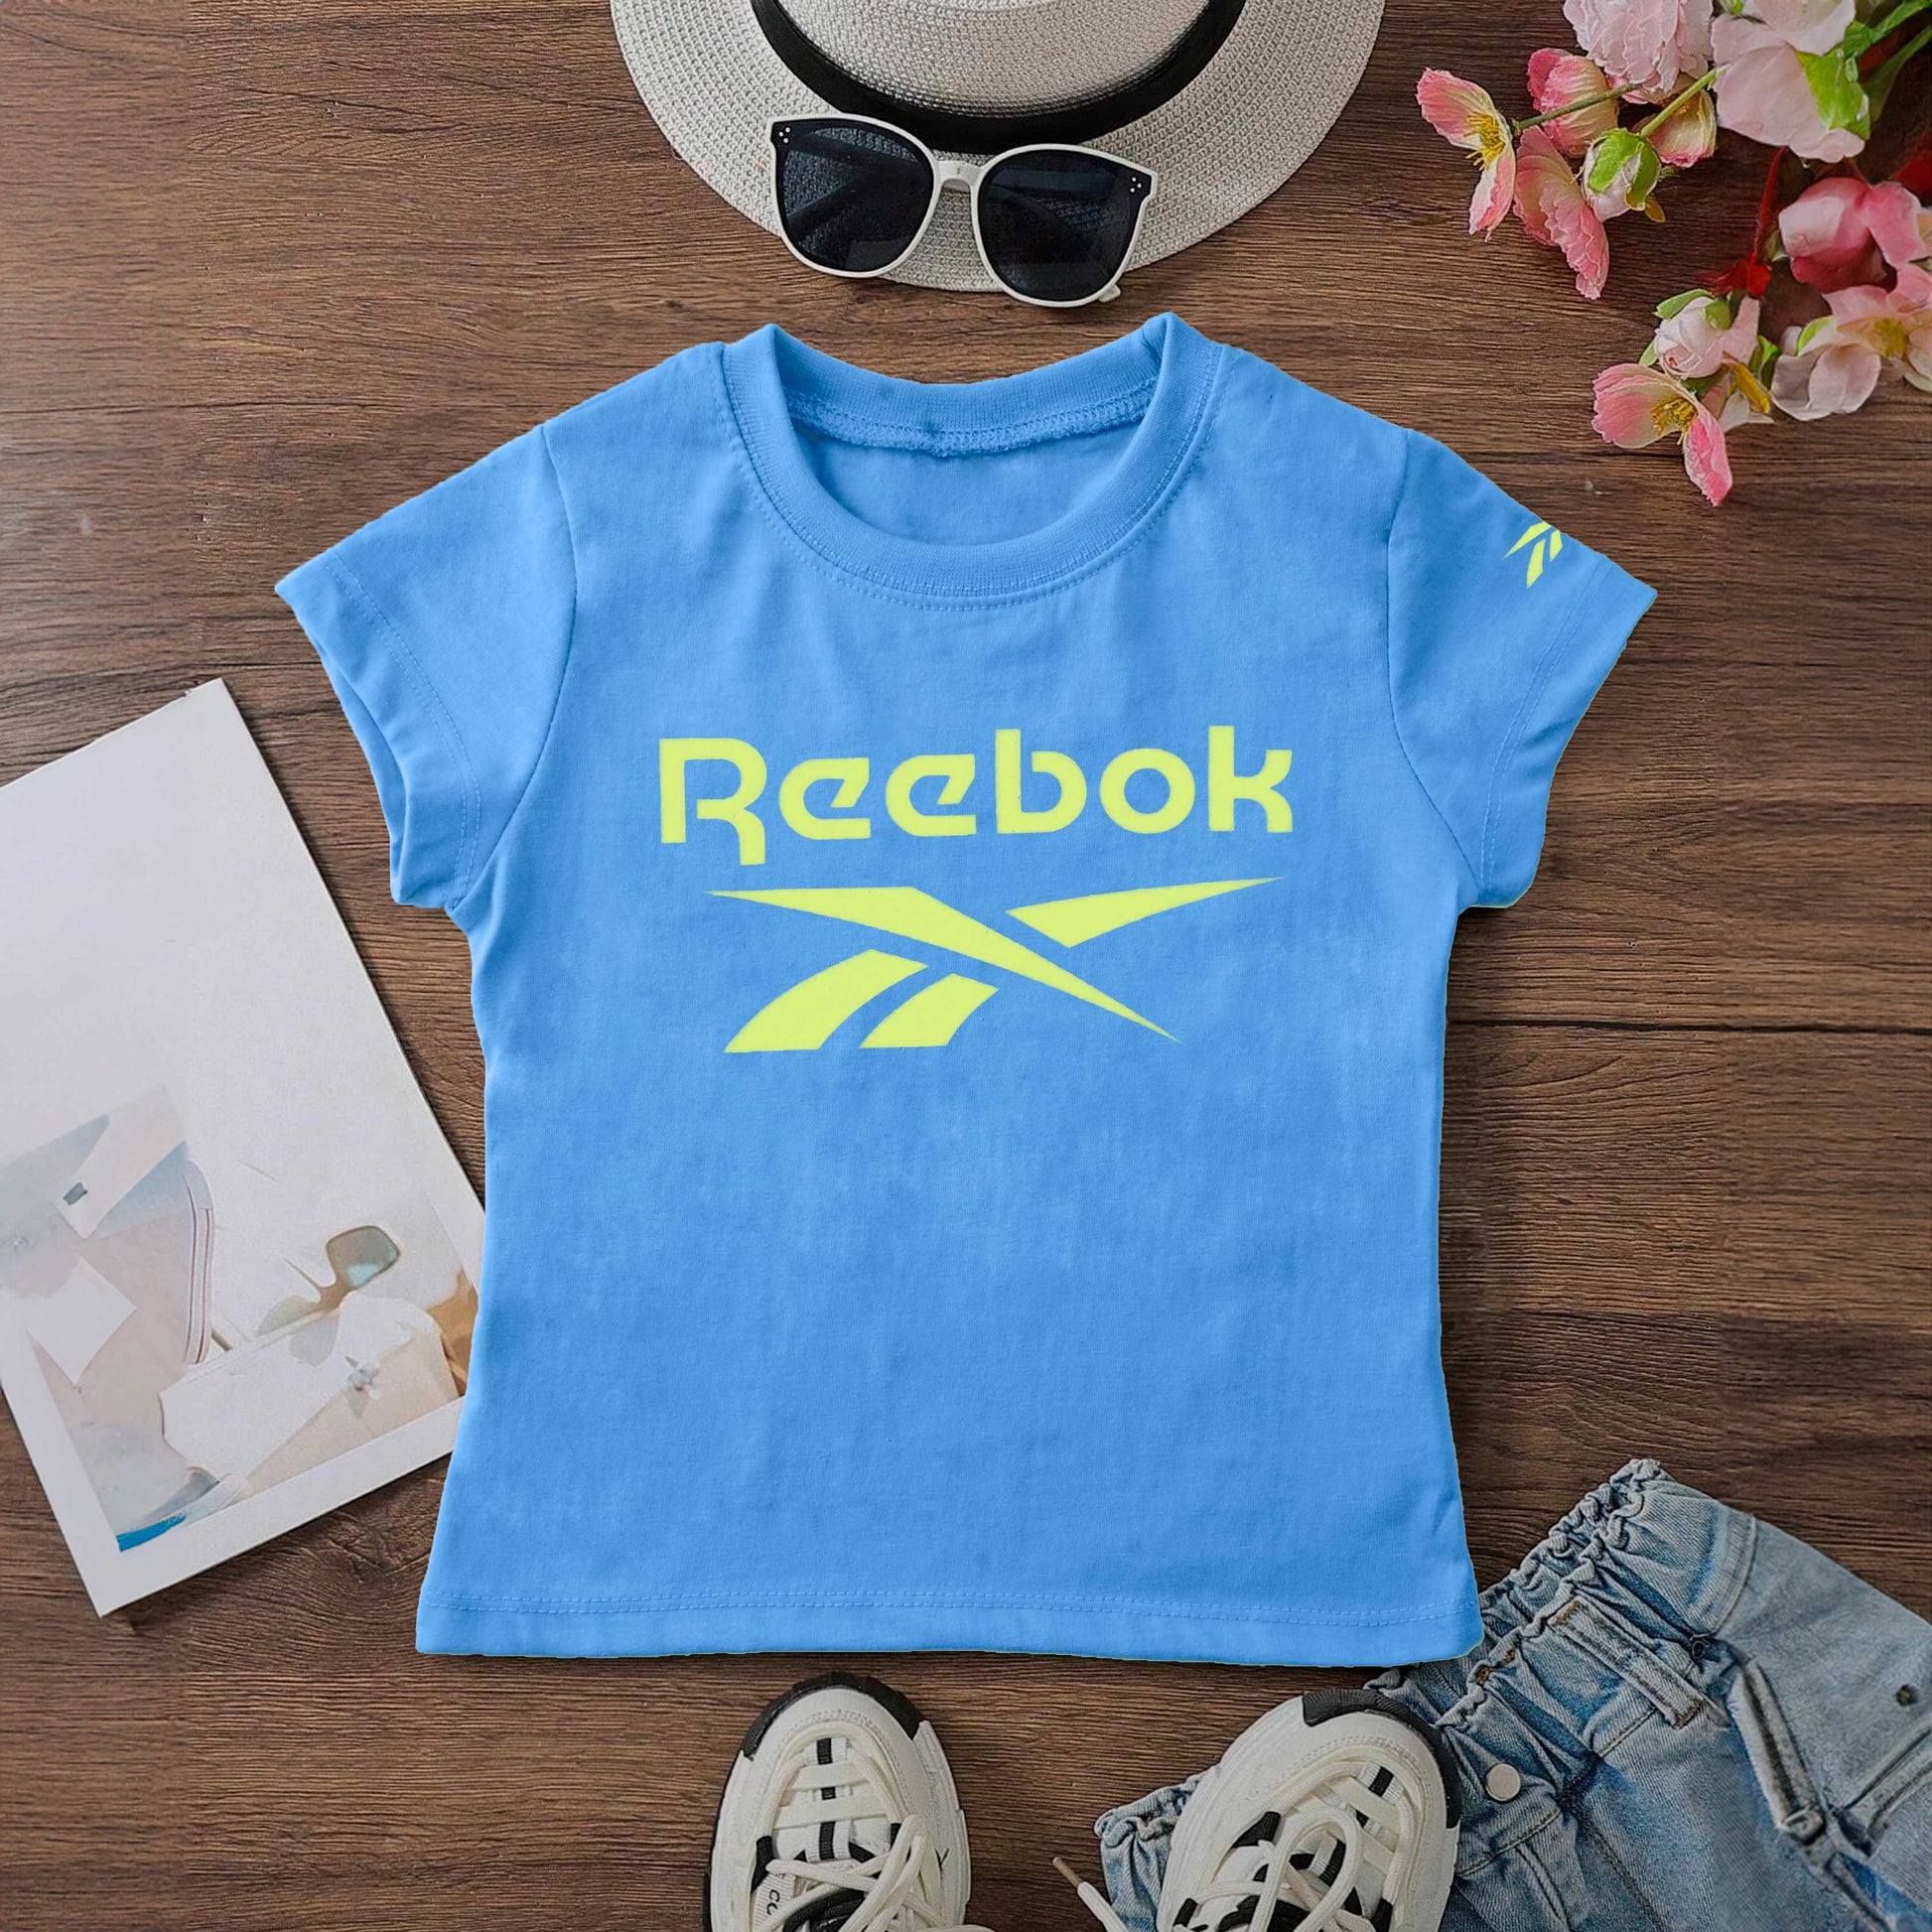 Reebok Kid's Logo Printed Minor Fault Short Sleeve Tee Shirt Kid's Tee Shirt HAS Apparel Blue 2 Years 